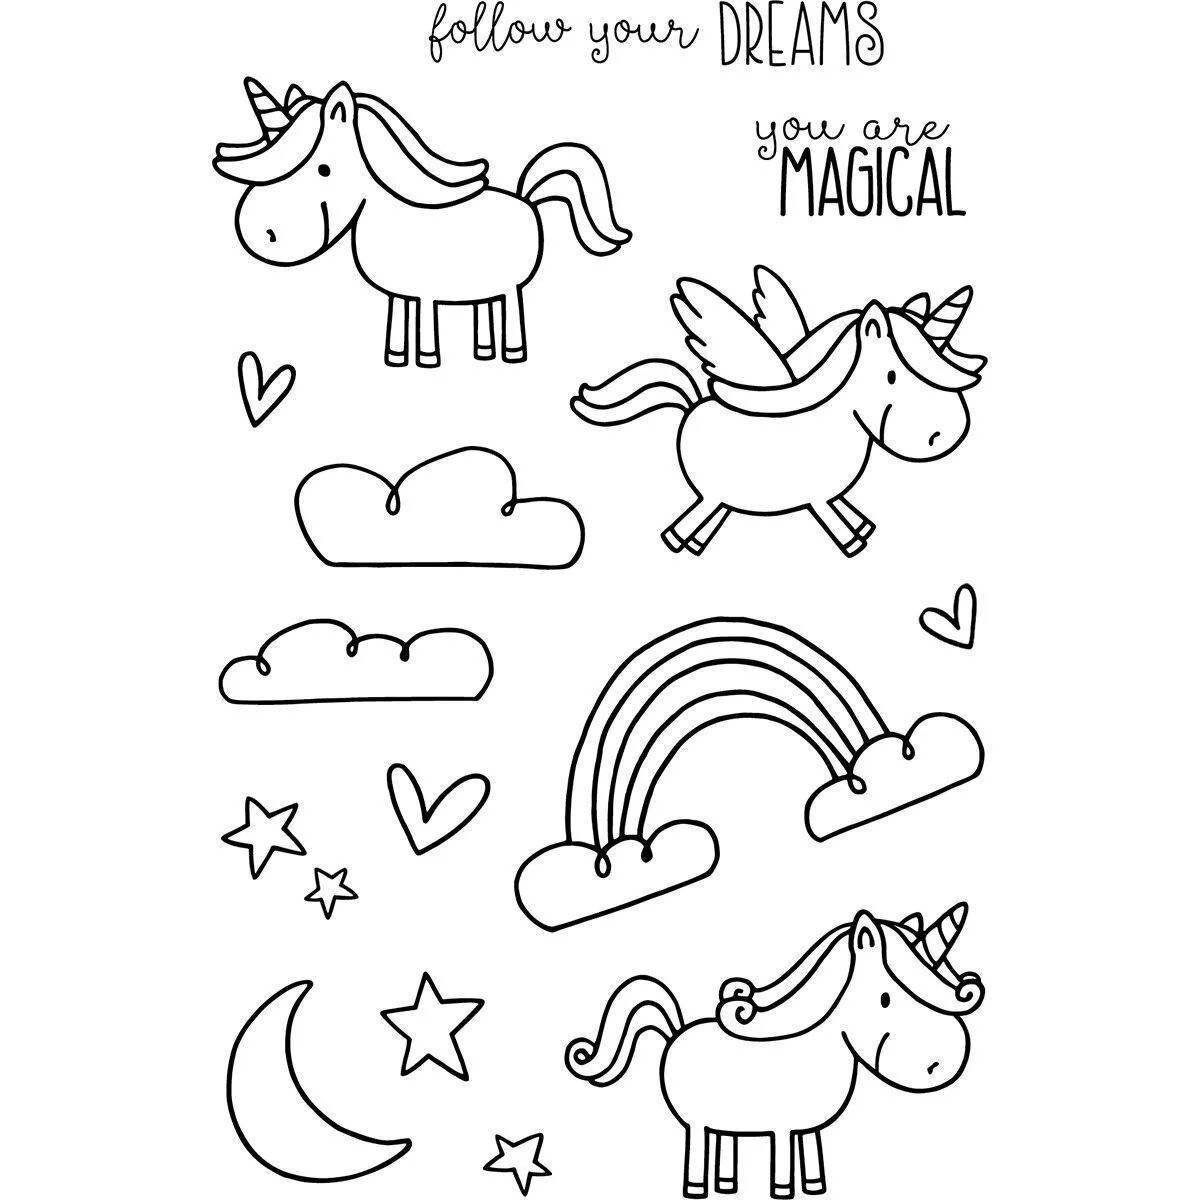 Dreamy coloring of many unicorns